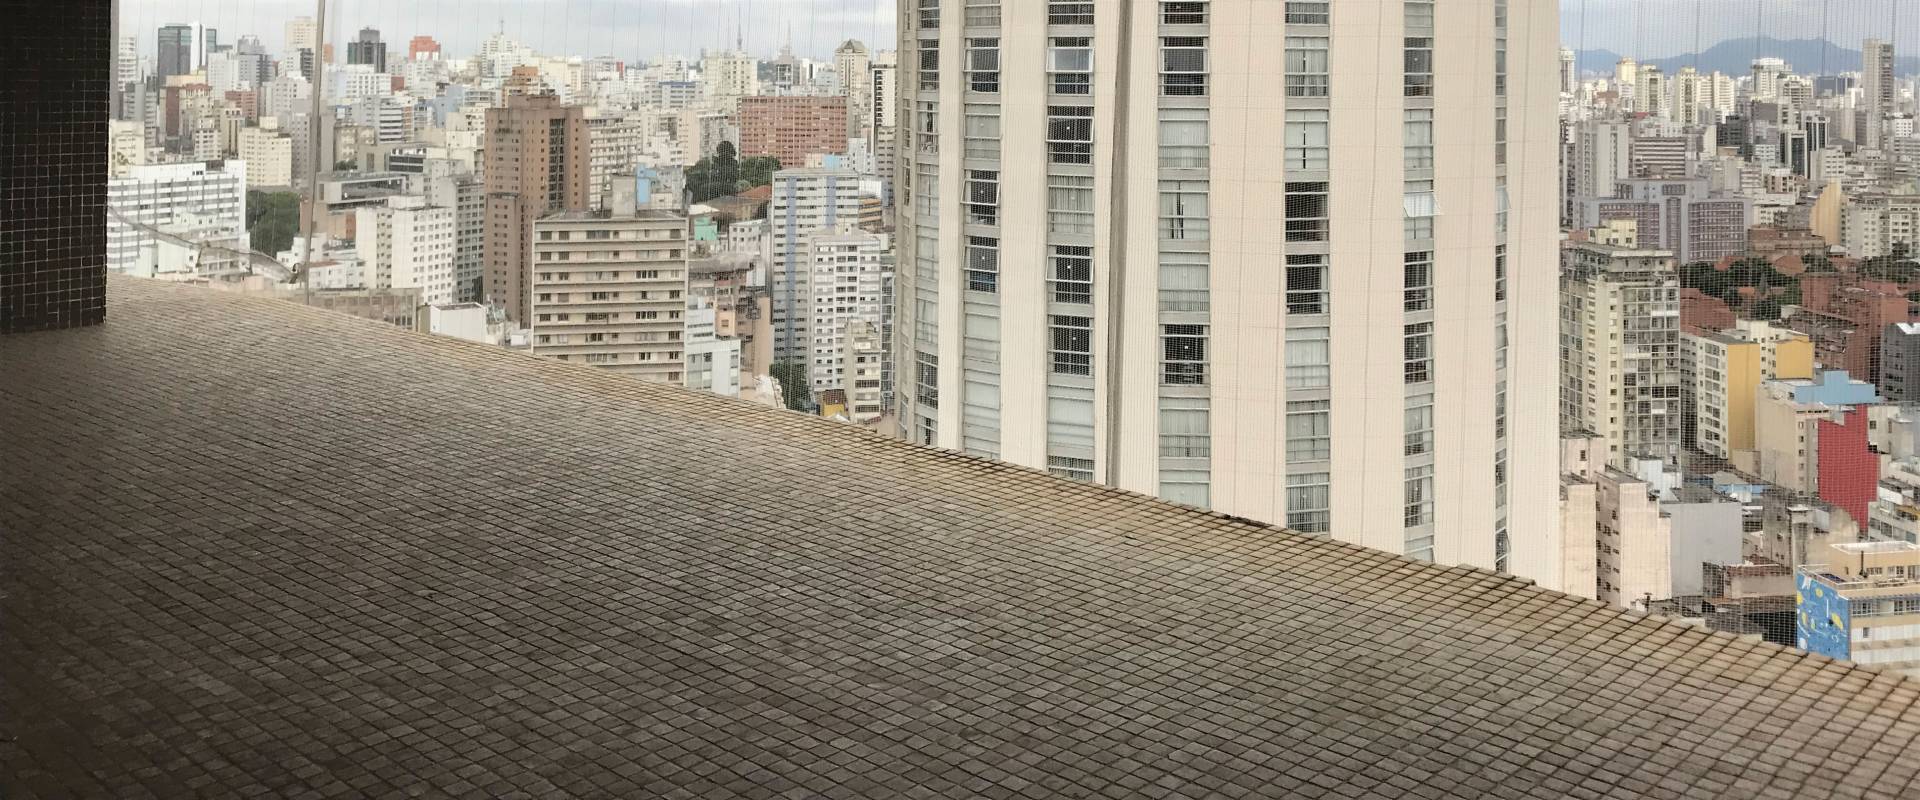 High-rise apartments in São Paulo